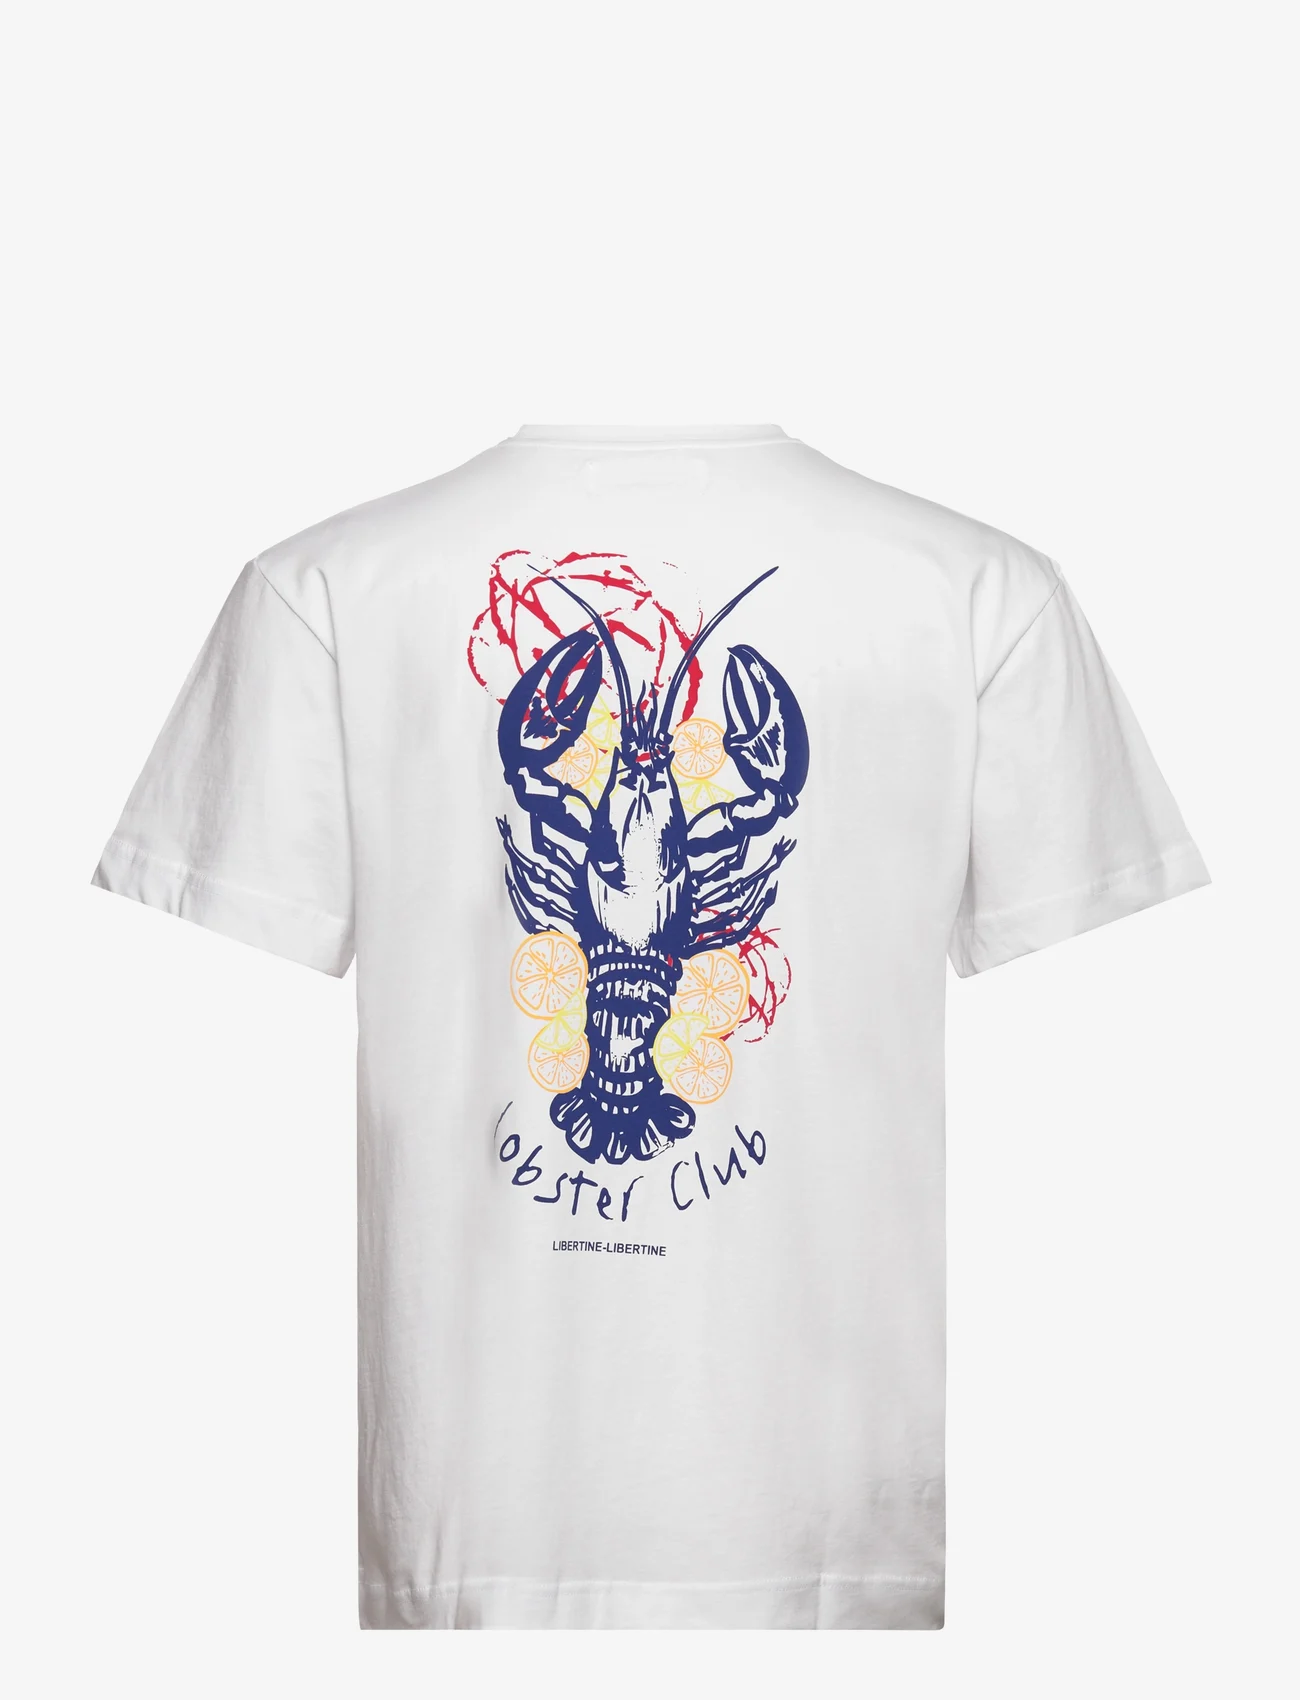 Libertine-Libertine - Beat Lobster Club 24 - nordic style - white - 1